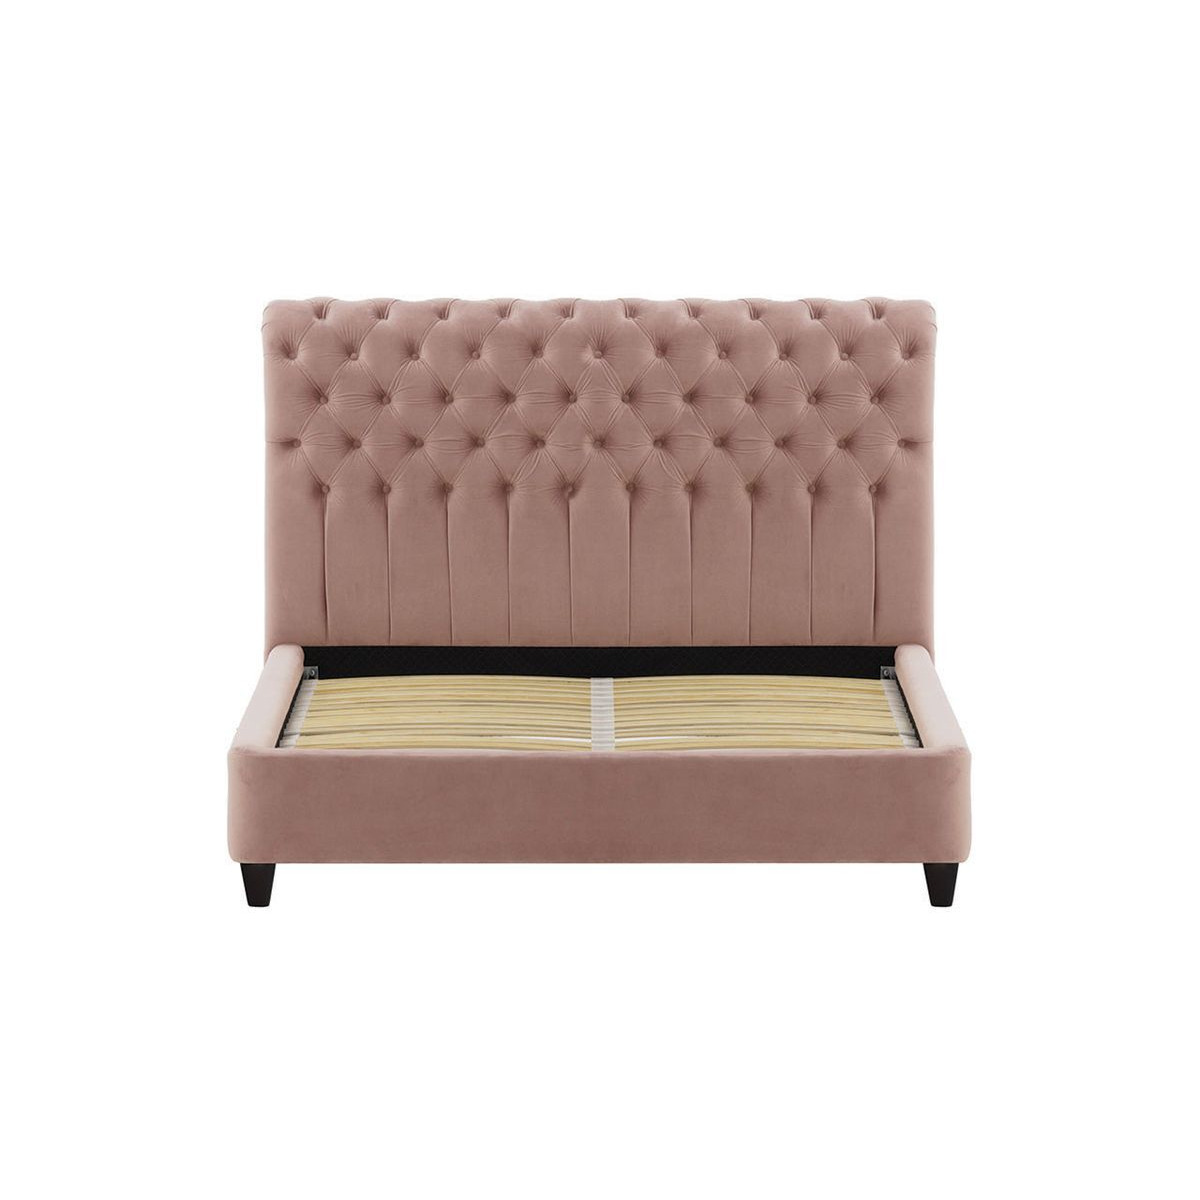 Hai Upholstered Bed Frame, lilac - image 1